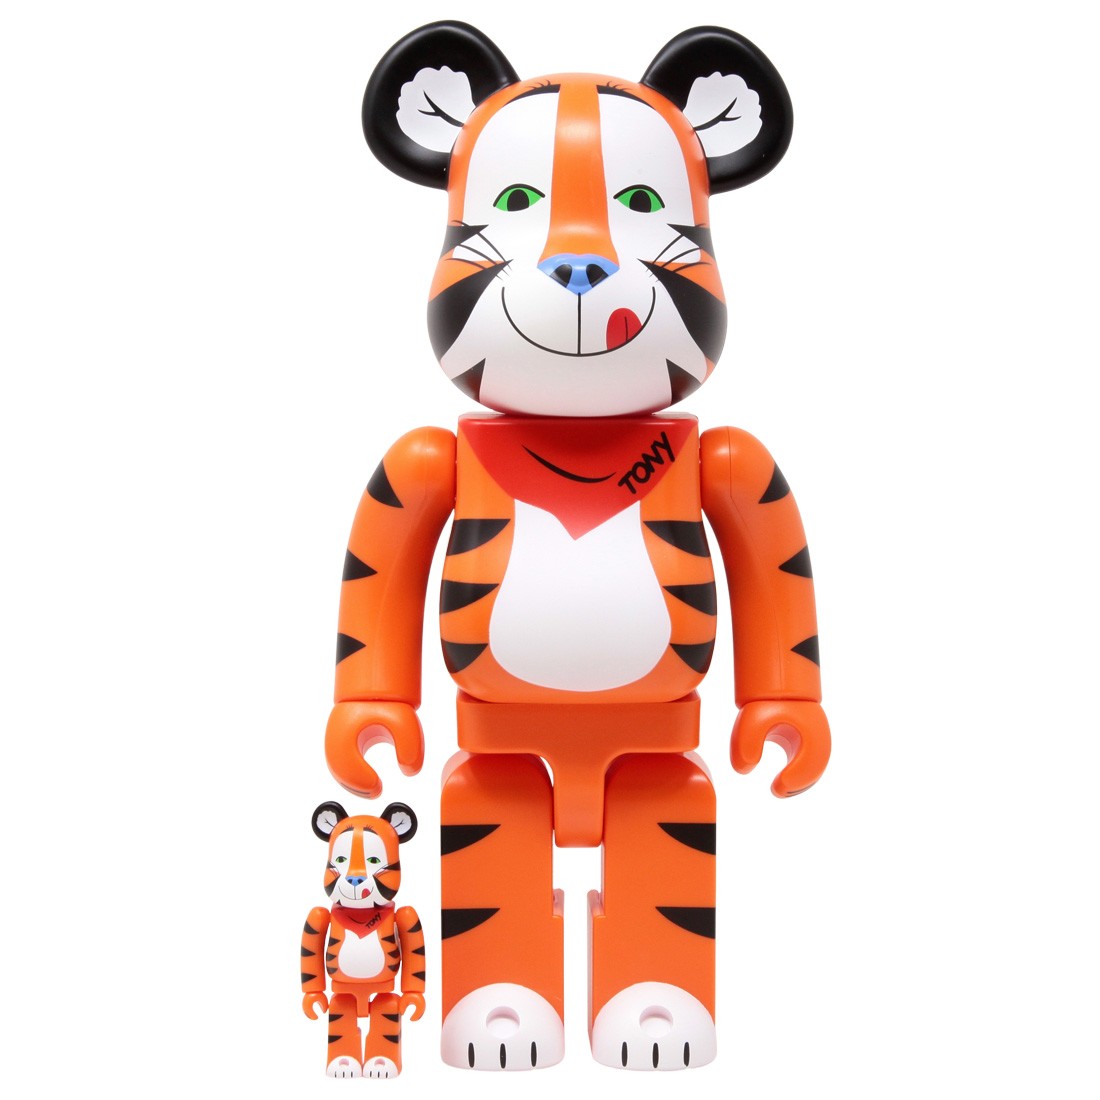 Medicom Kellogg's Tony The Tiger Vintage Ver. 100% 400% Bearbrick Figure Set (orange)